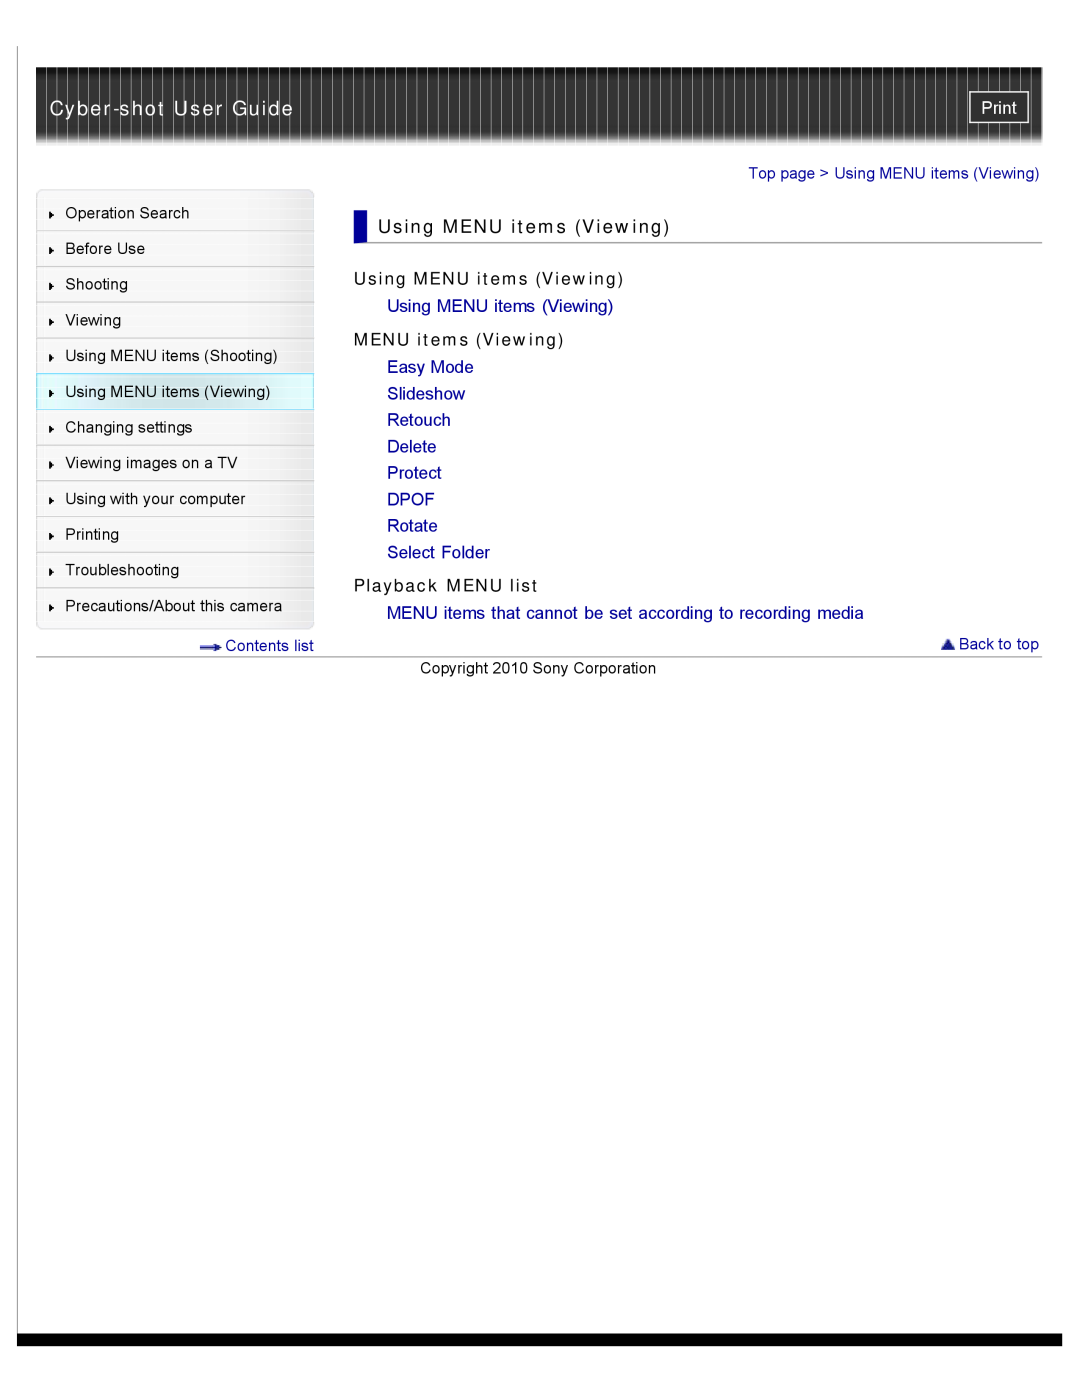 Sony DSCW530, DSC-W530, W550 manual Using MENU items Viewing, Playback MENU list, Cyber-shot User Guide, Print 